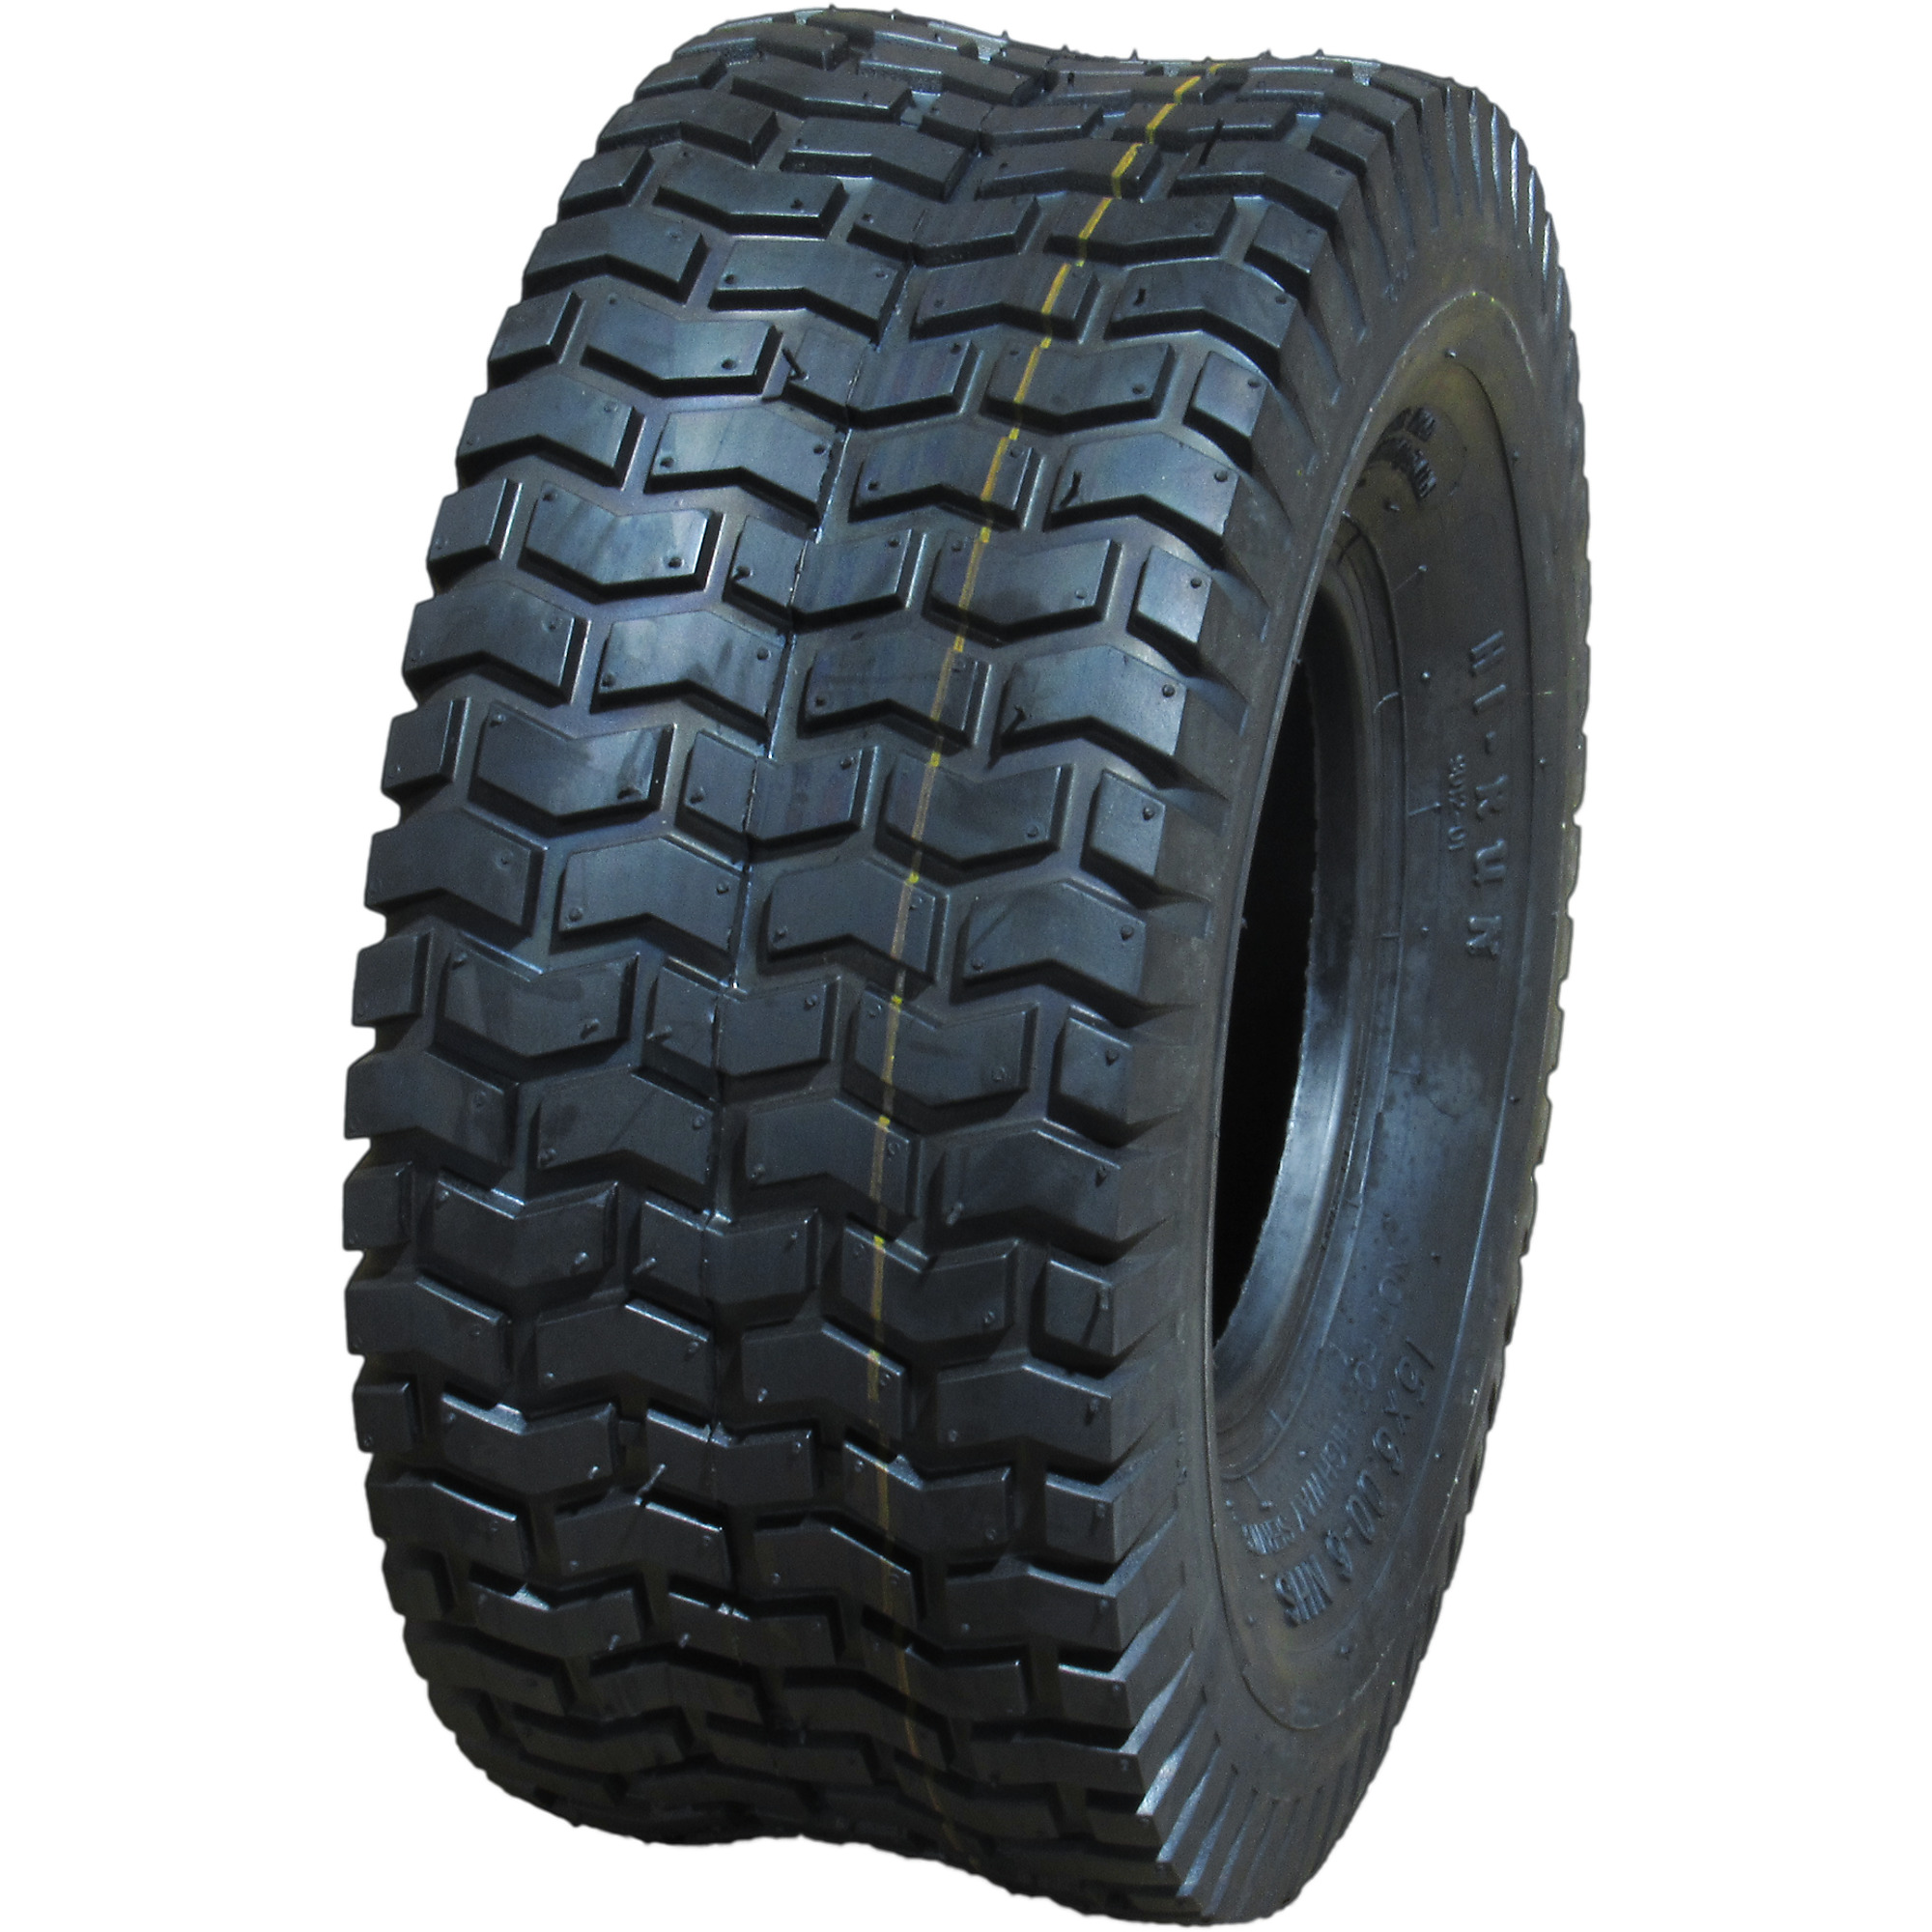 HI-RUN, Lawn Garden Tire, SU12 Turf II, Tire Size 18X6.50-8 Load Range Rating B, Model WD1279